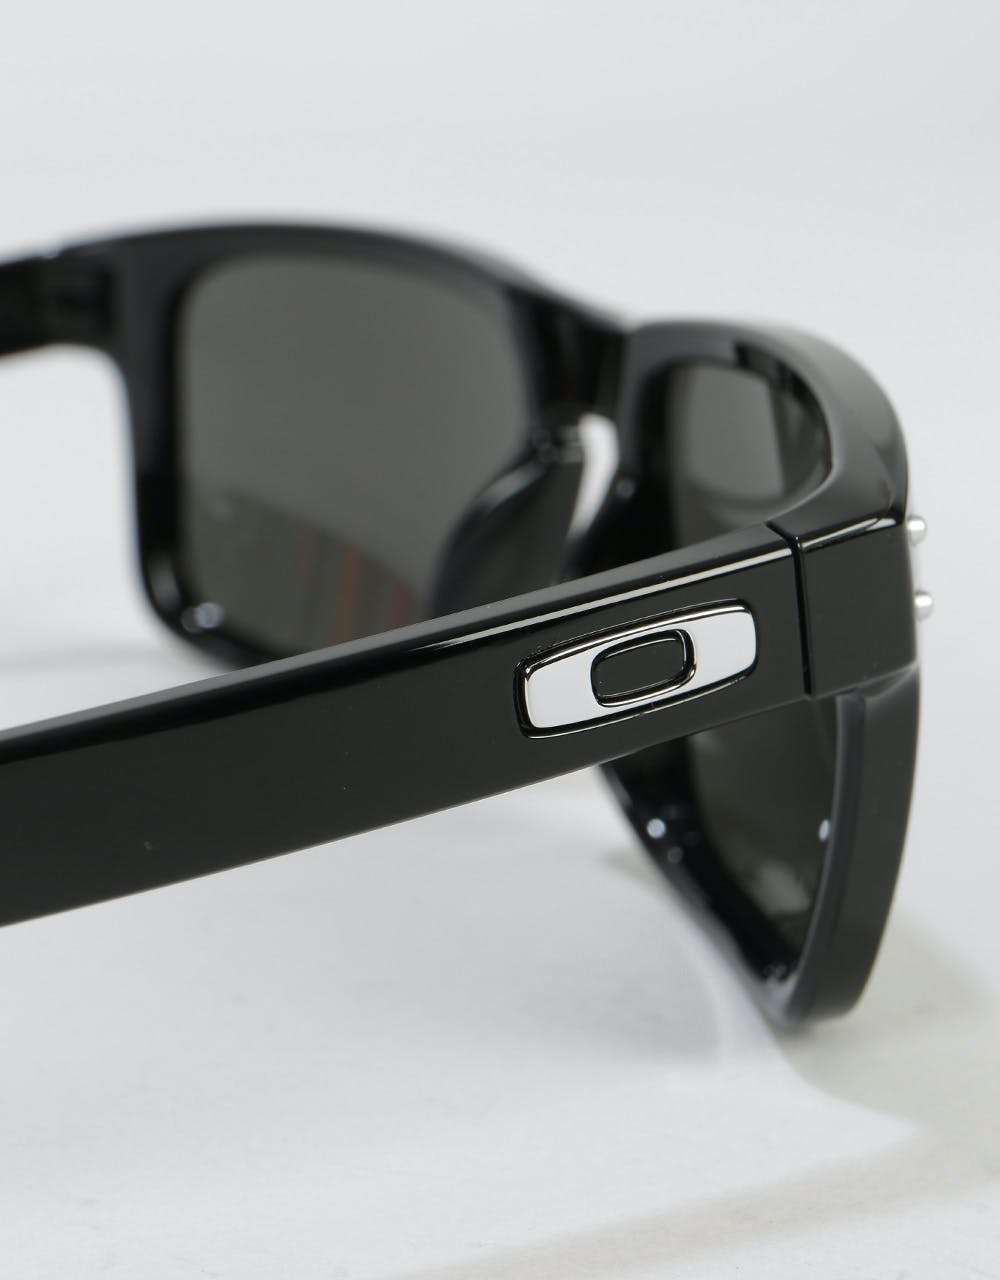 Oakley Holbrook Sunglasses - Polished Black (Prizm Sapphire Lens)